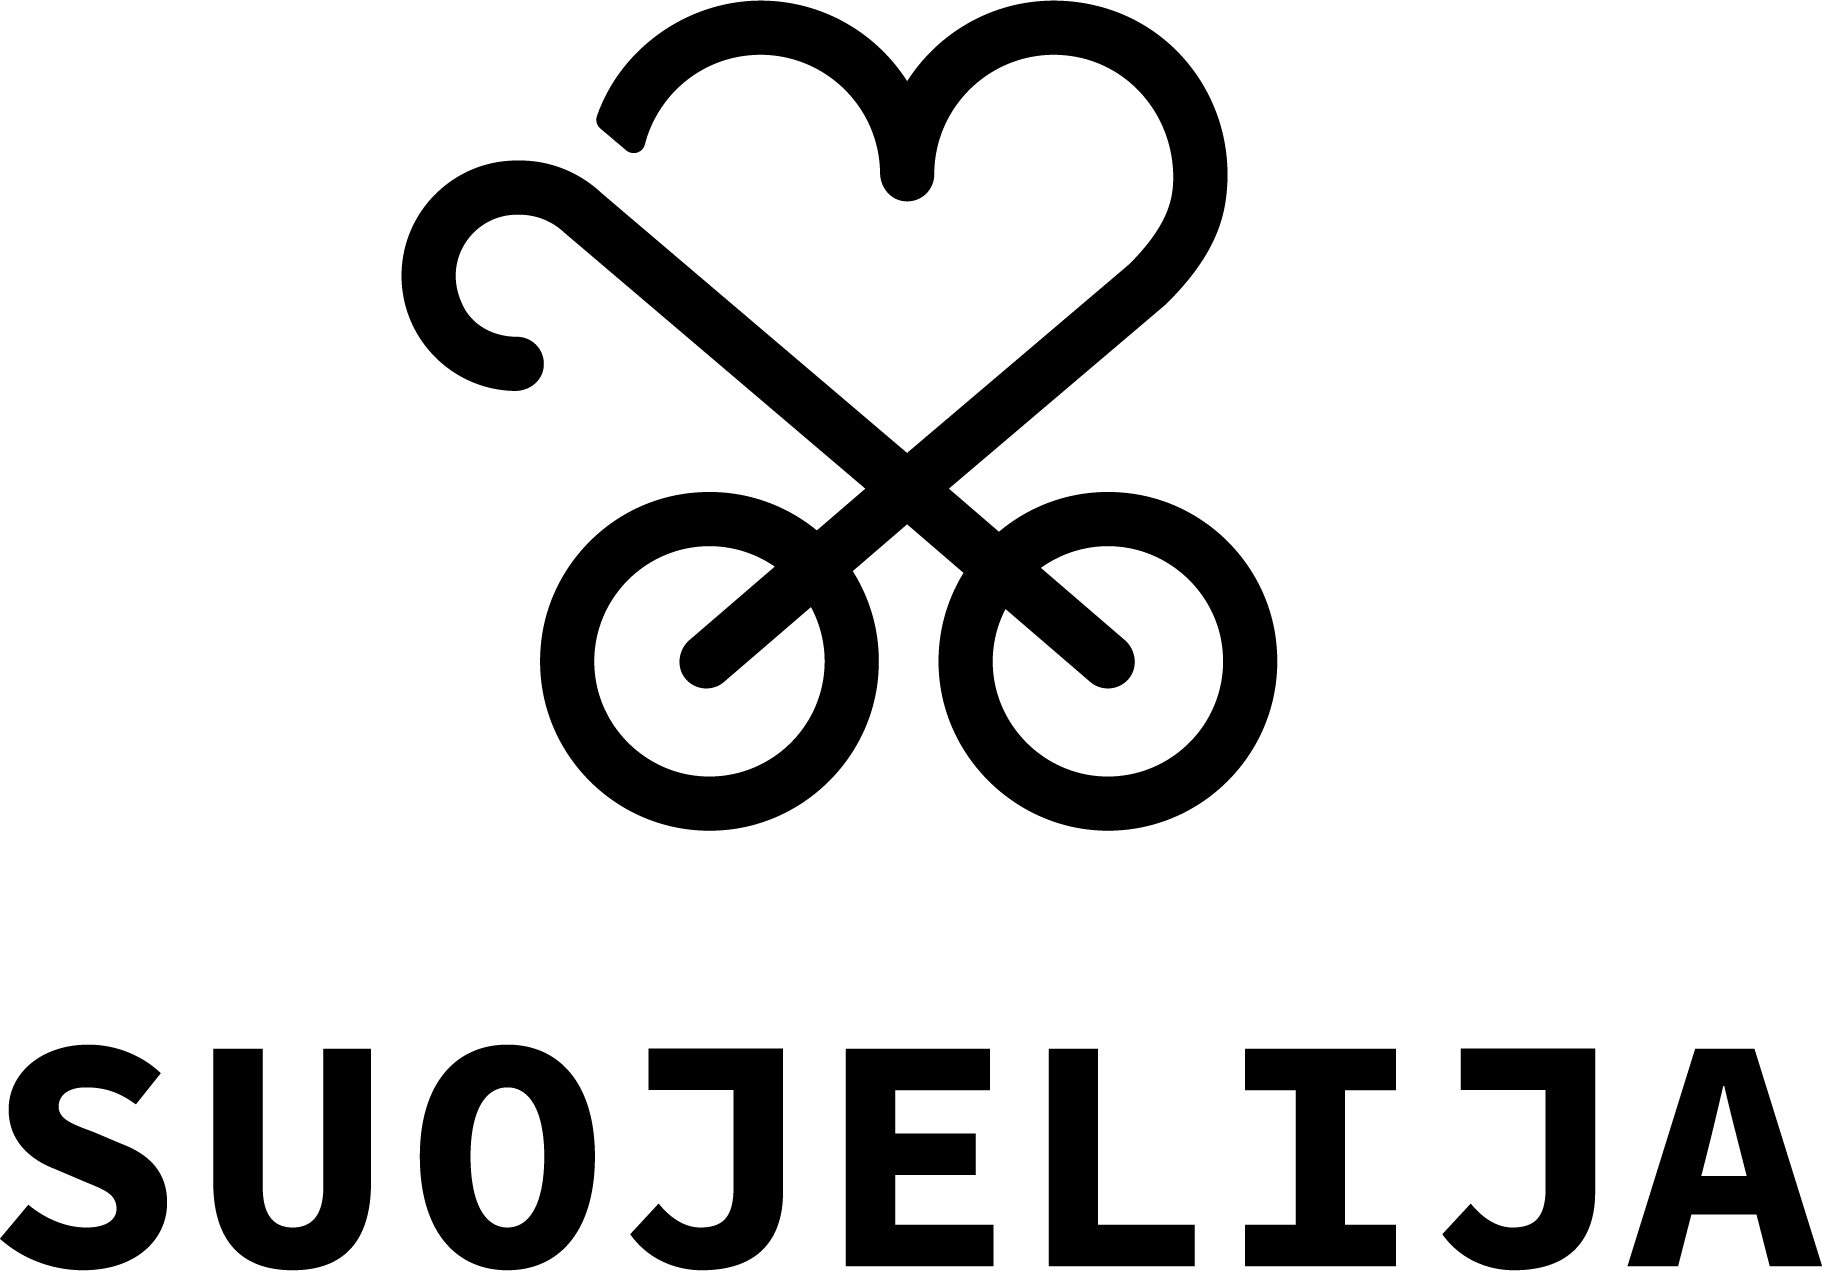 Suojelija logo